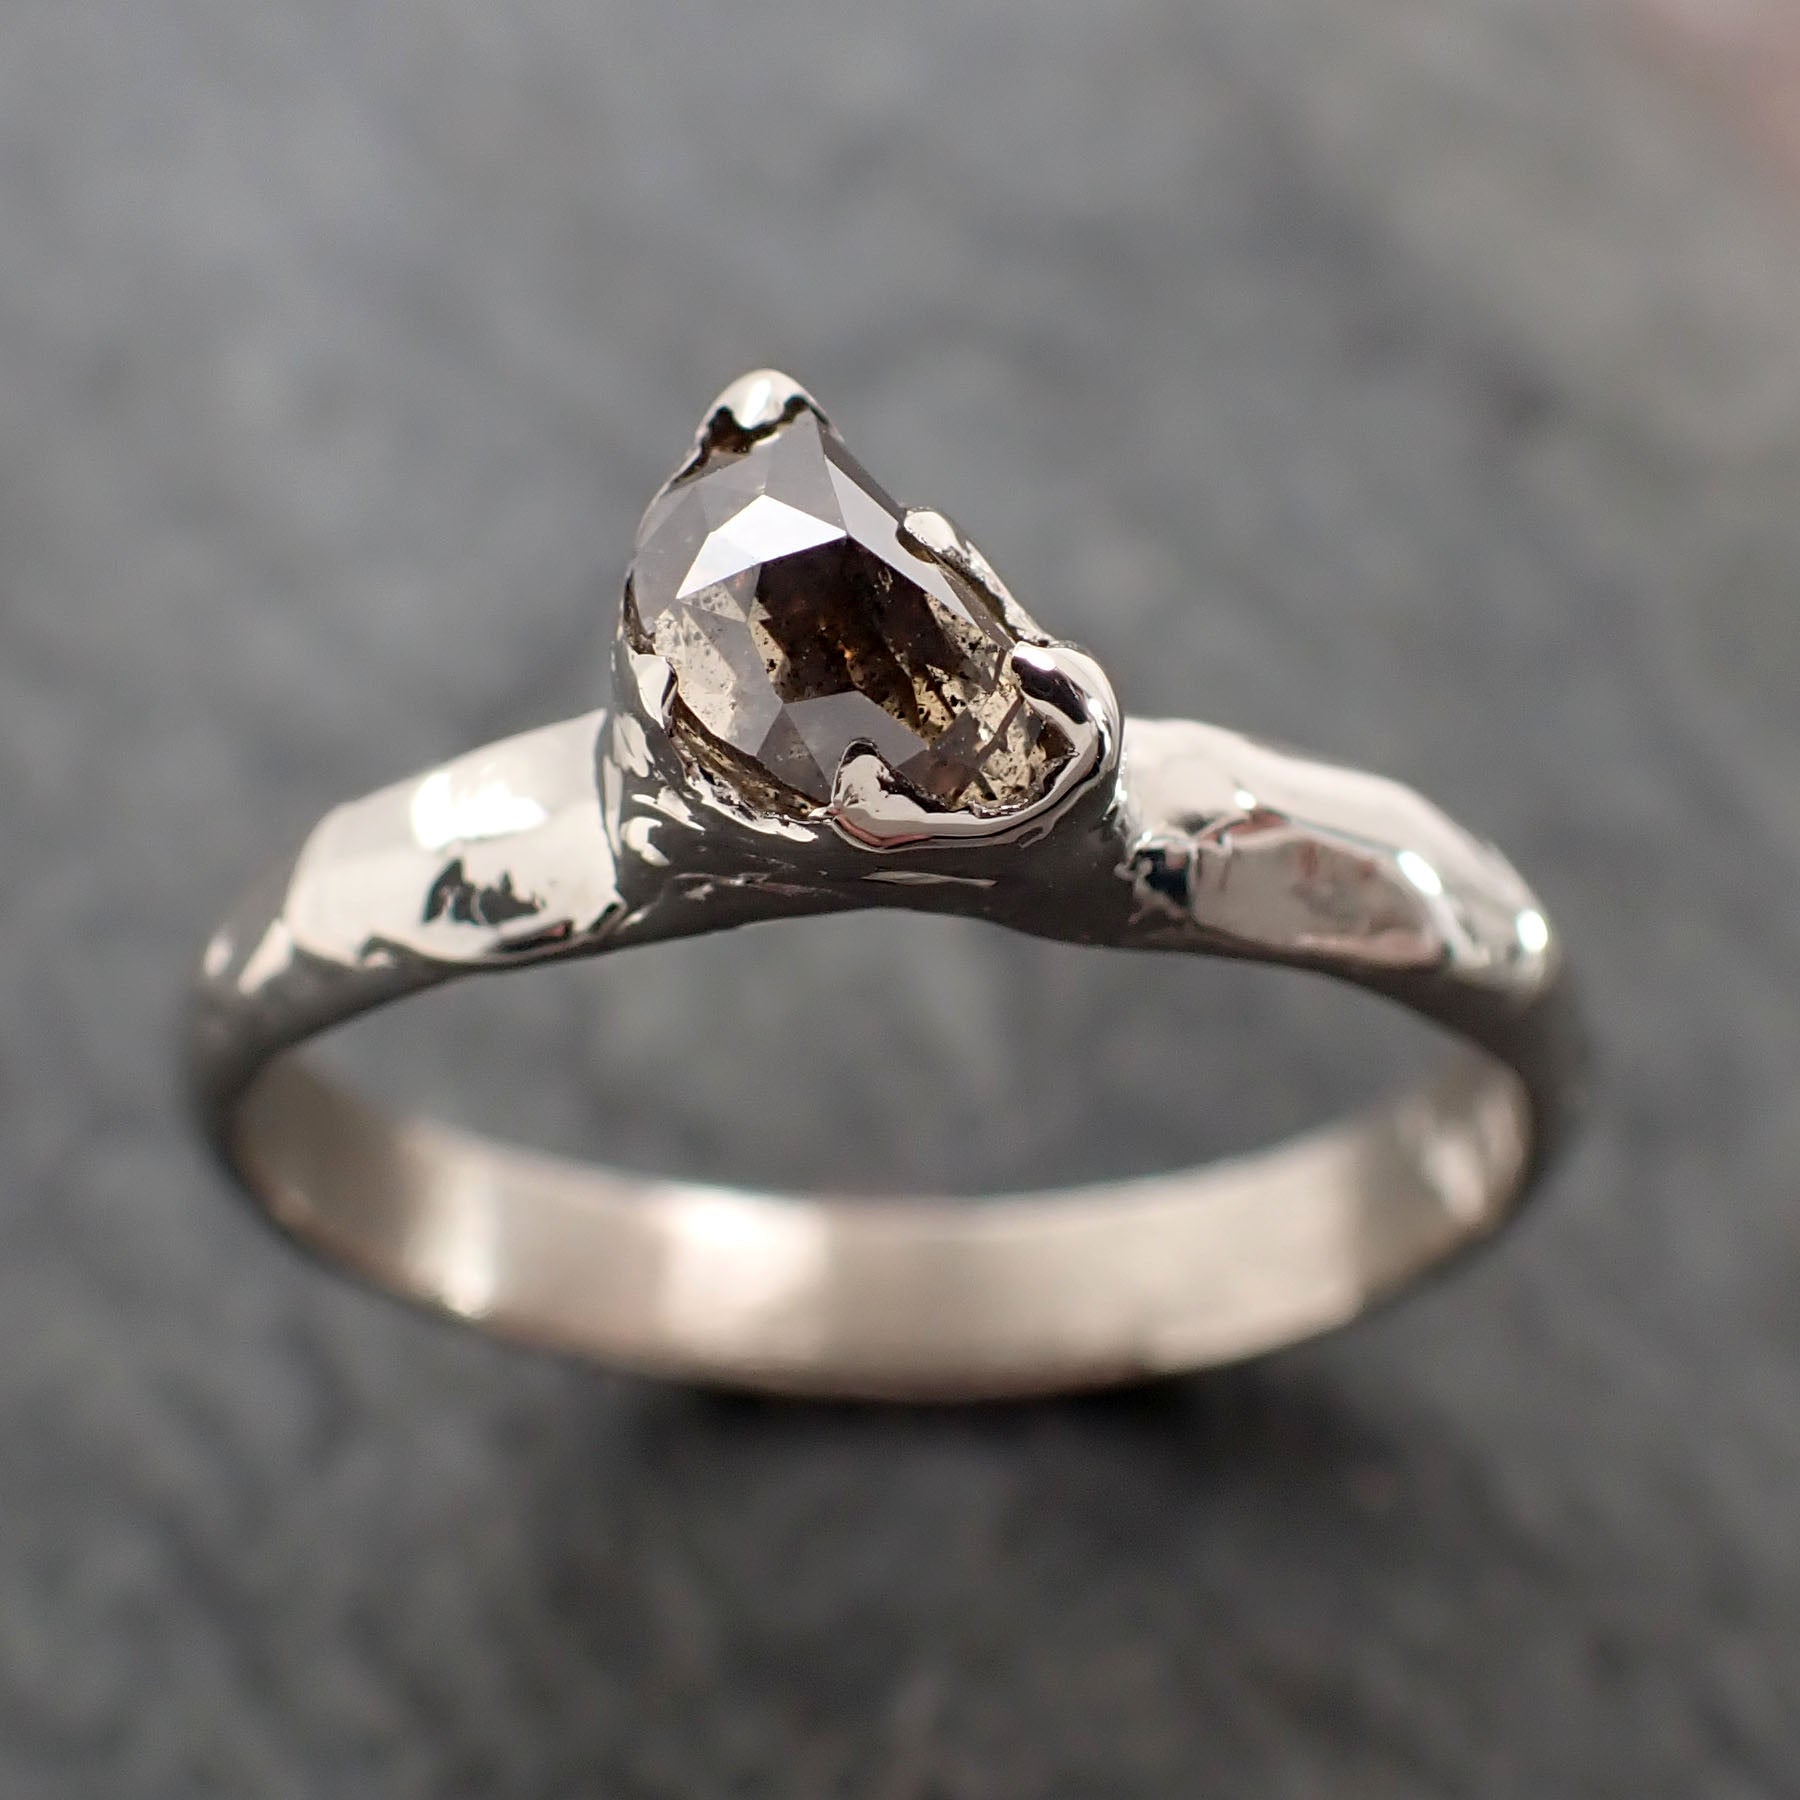 Fancy Cut Champagne Half Moon Diamond Solitaire Engagement 14k White Gold Wedding Ring byAngeline 2833